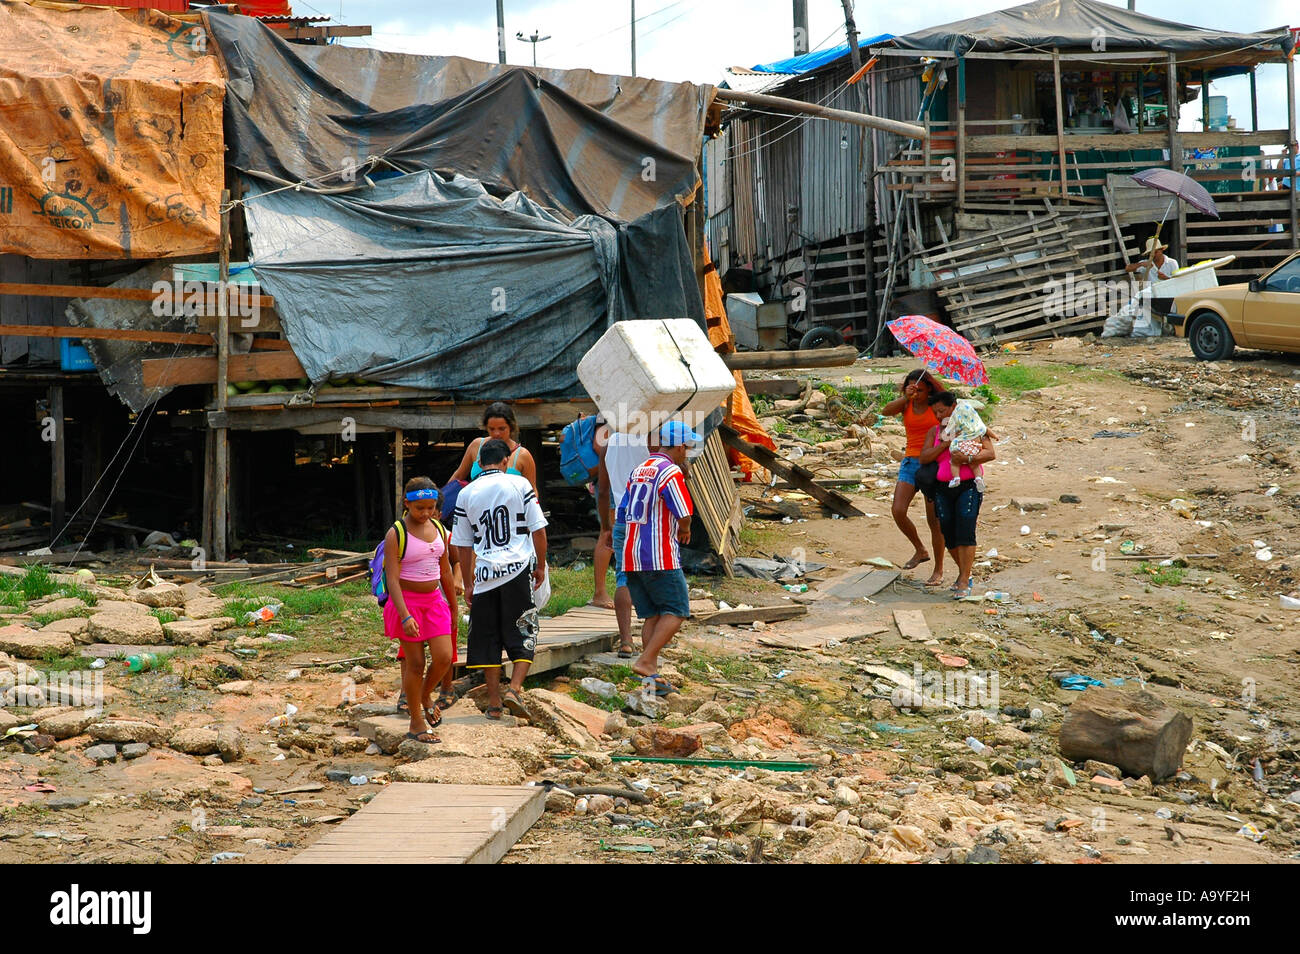 Slum area, Manaus, Brazil Stock Photo